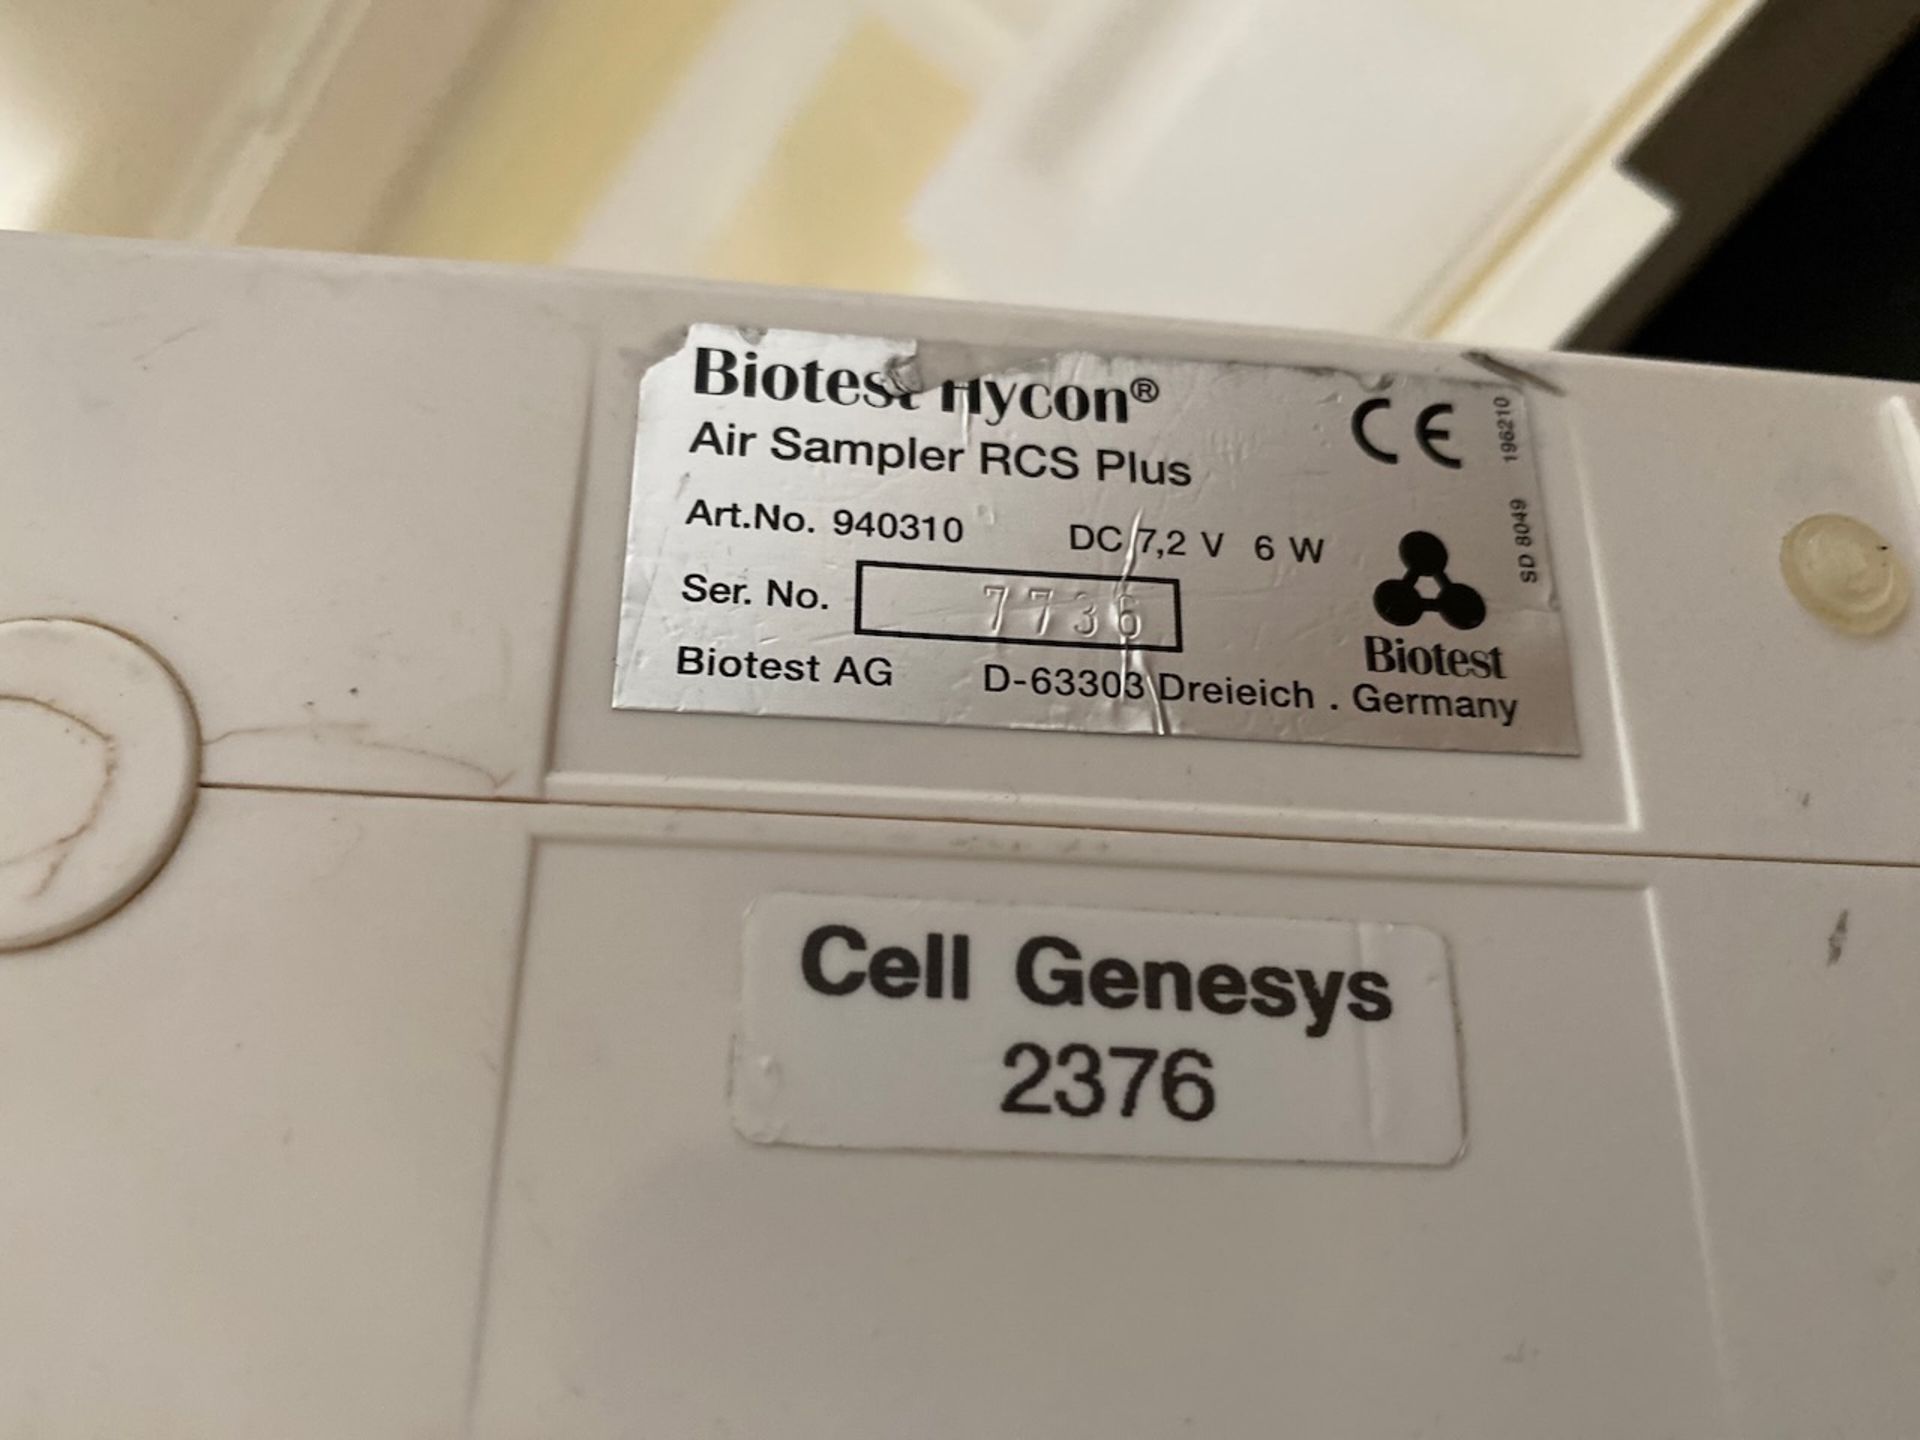 Biotest Hycon RCS Plus Air Sampler - Image 4 of 4